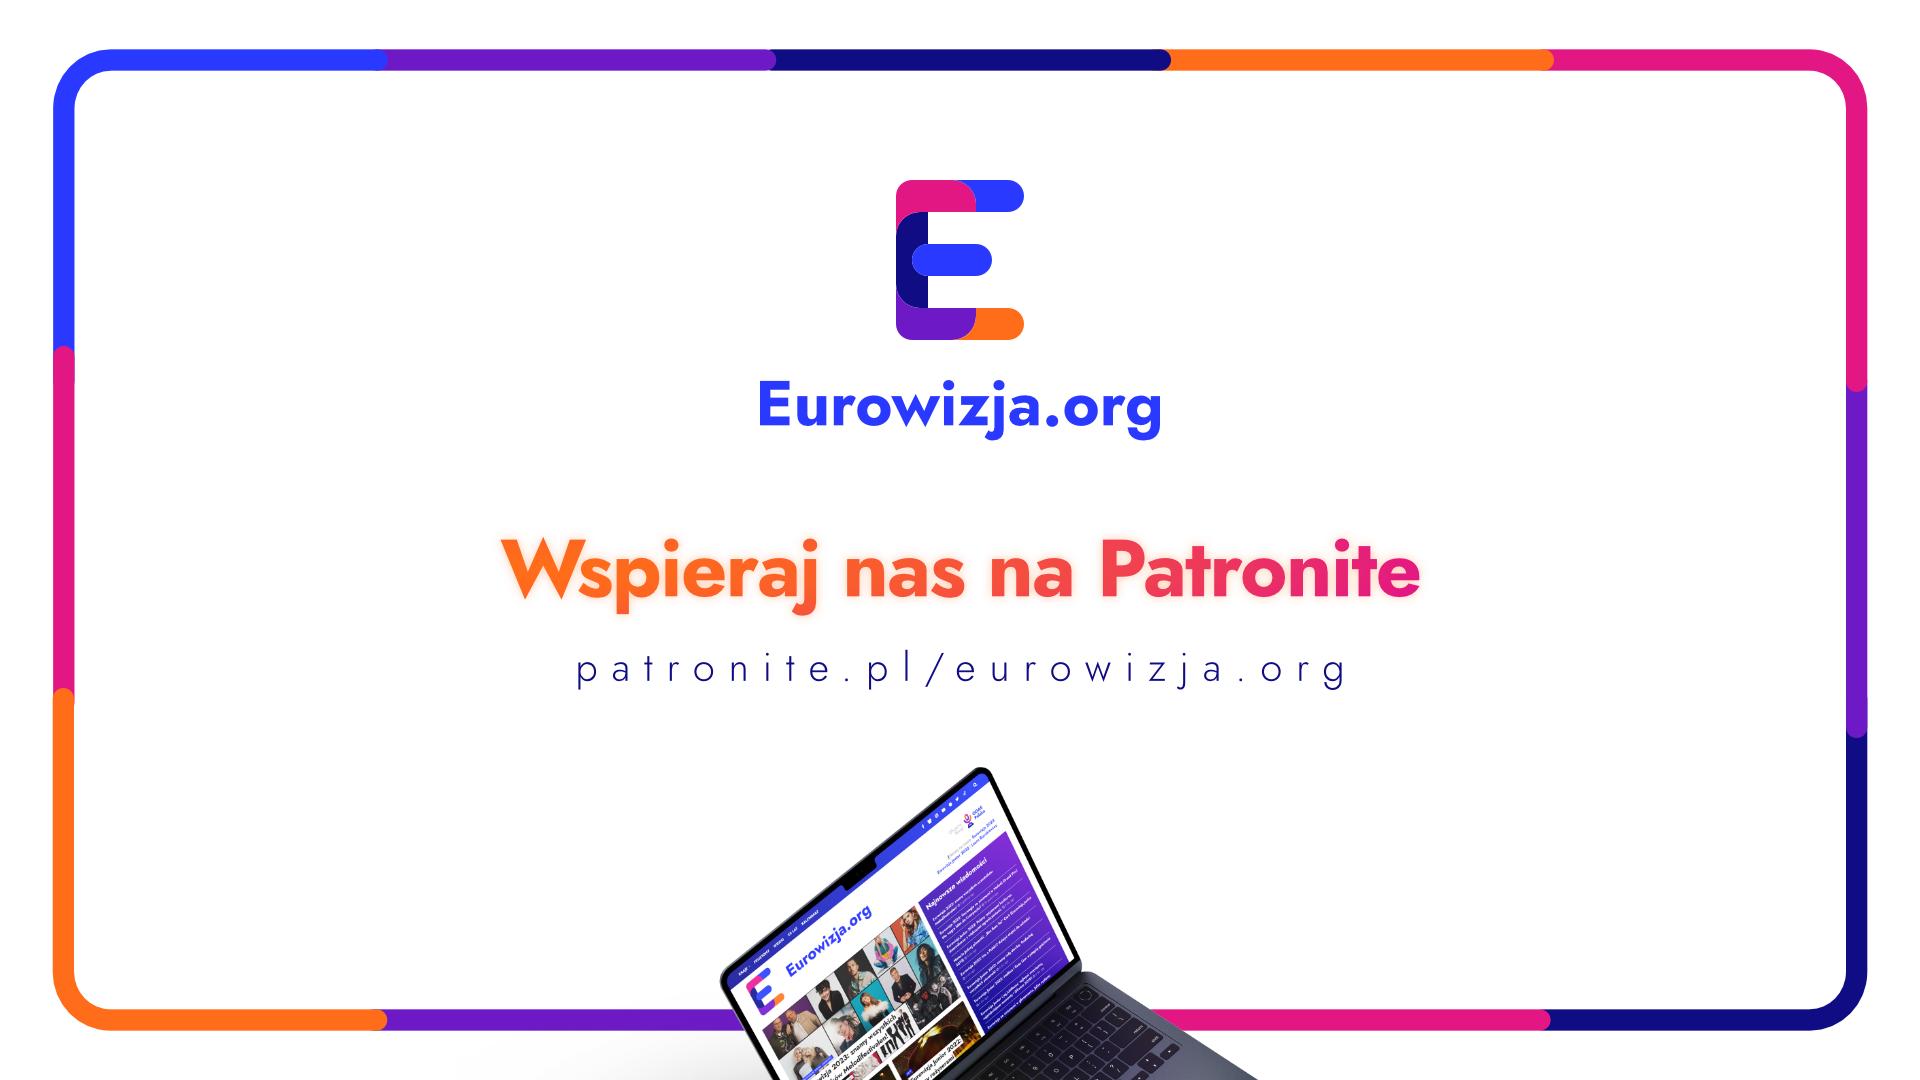 Eurowizja.org, Patronite